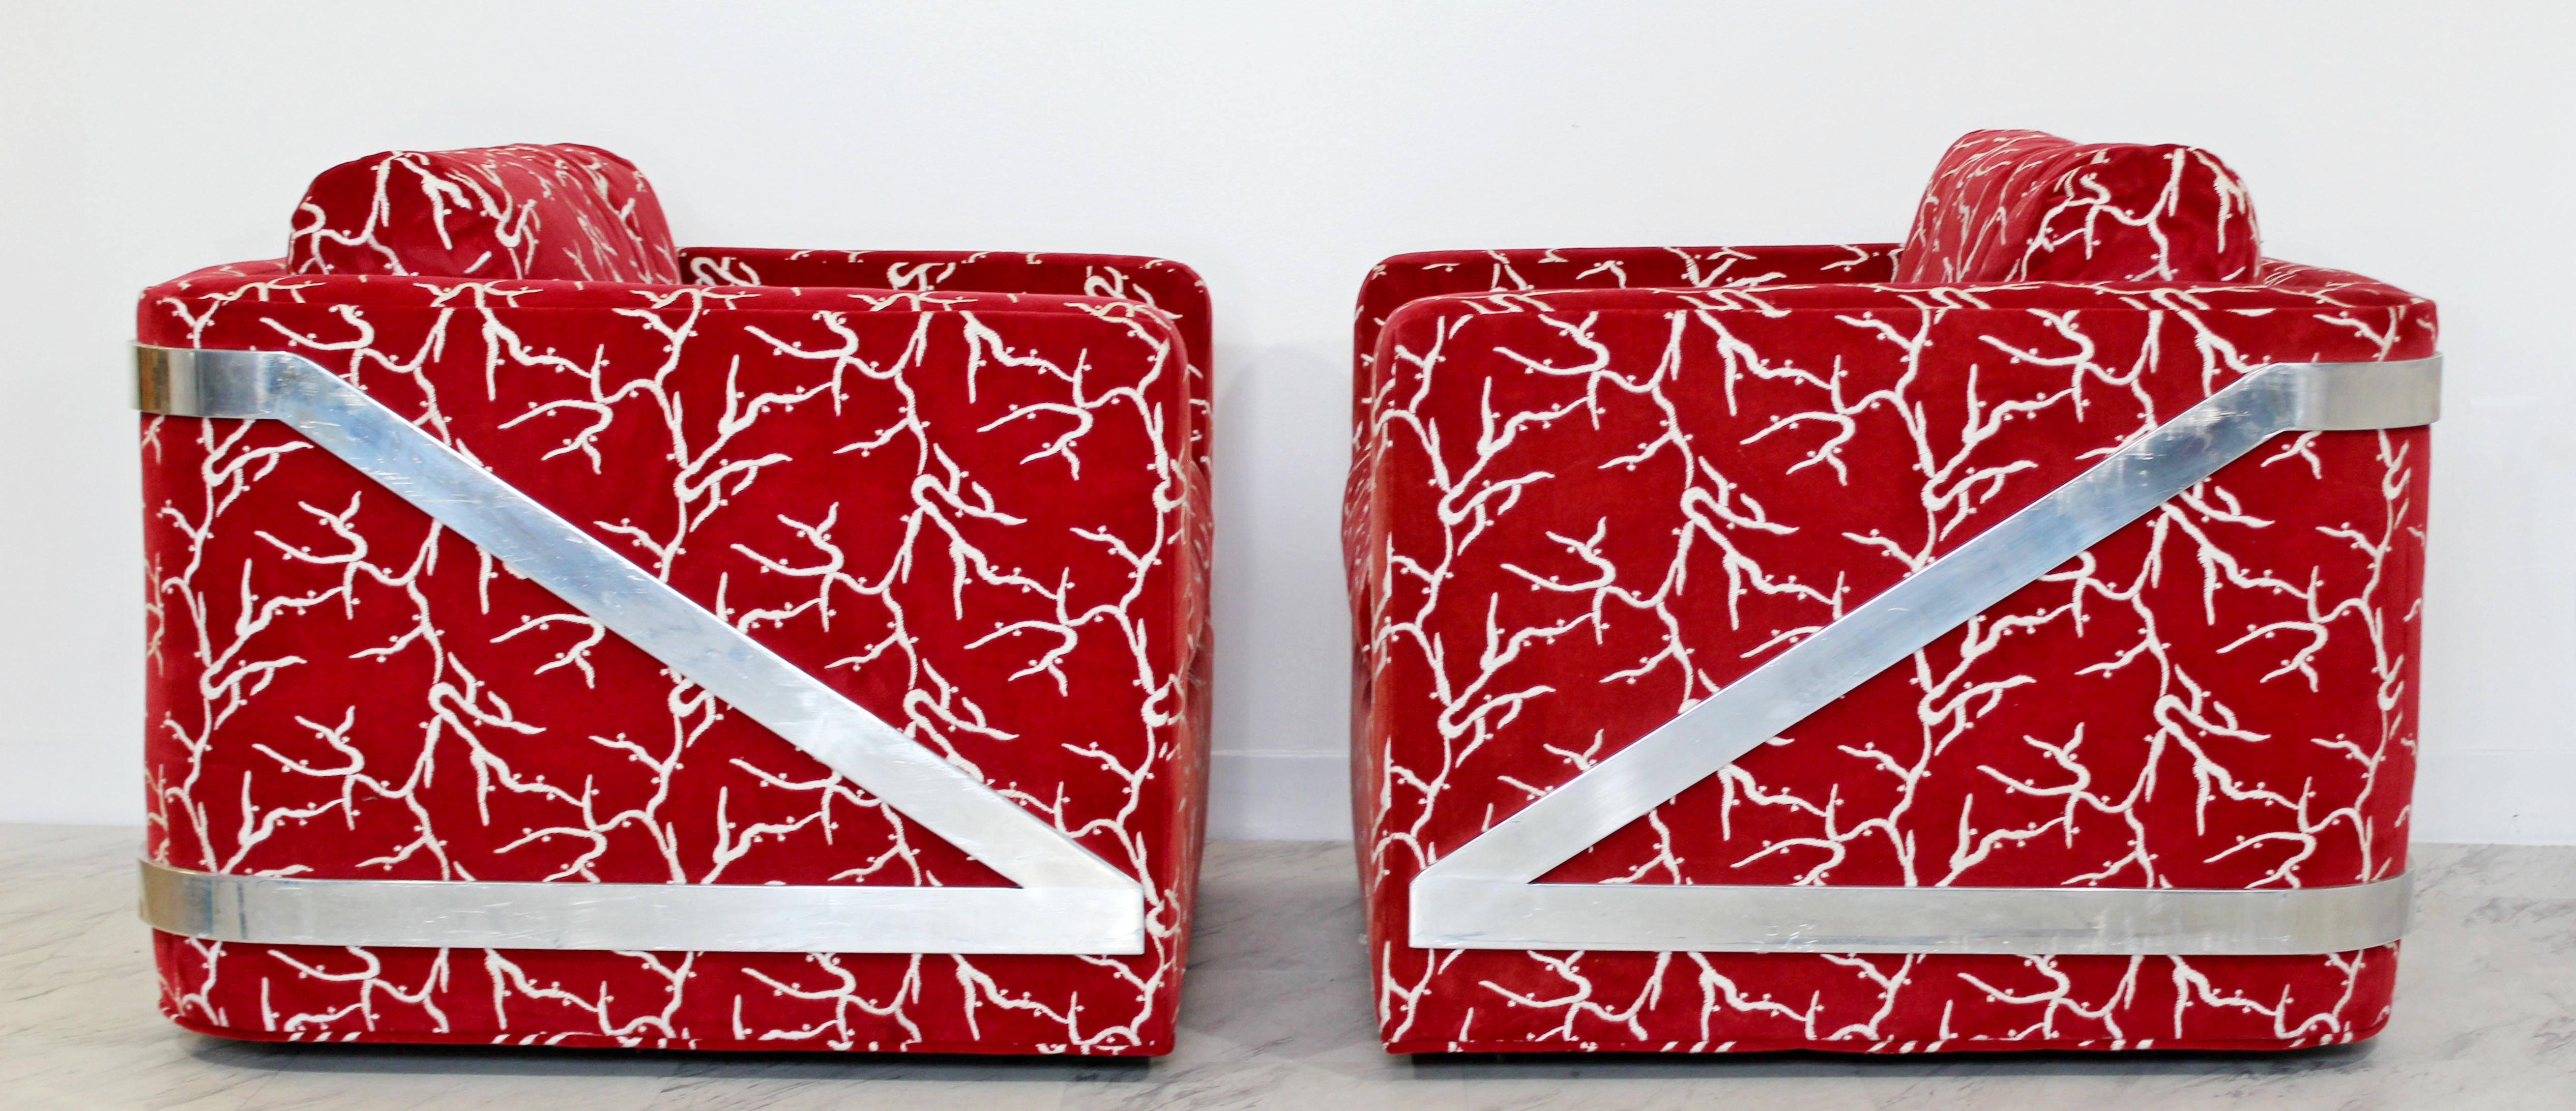 American Mid-Century Modern Erwin Lambeth Pair of Chrome Cube Lounge Chairs, 1970s